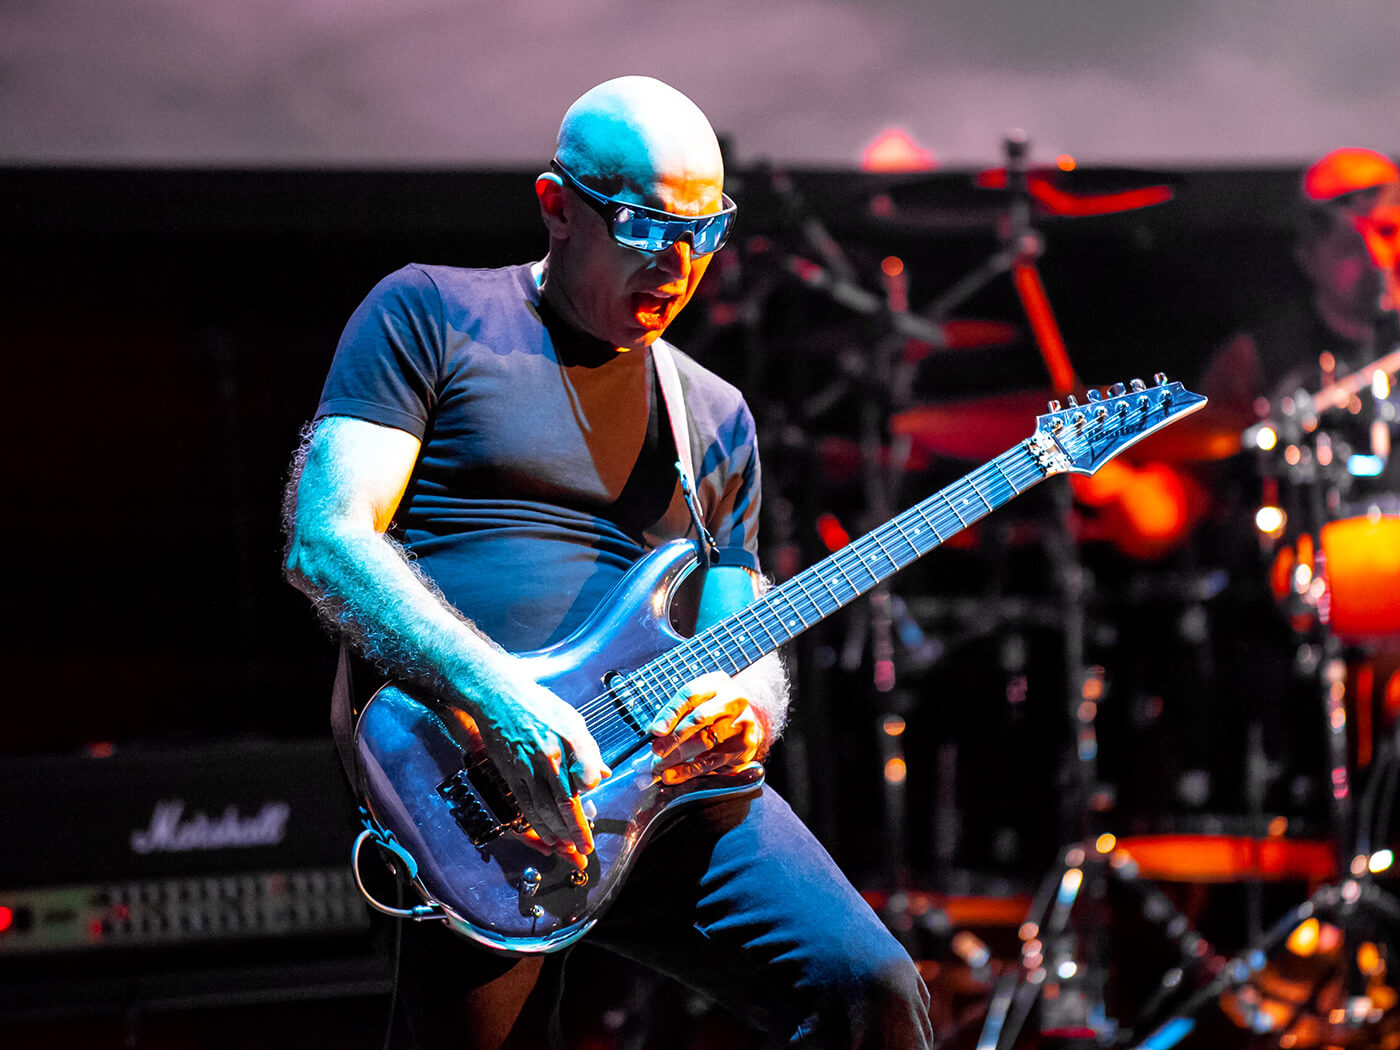 Joe Satriani has announced new 2020 tour dates in the UK.